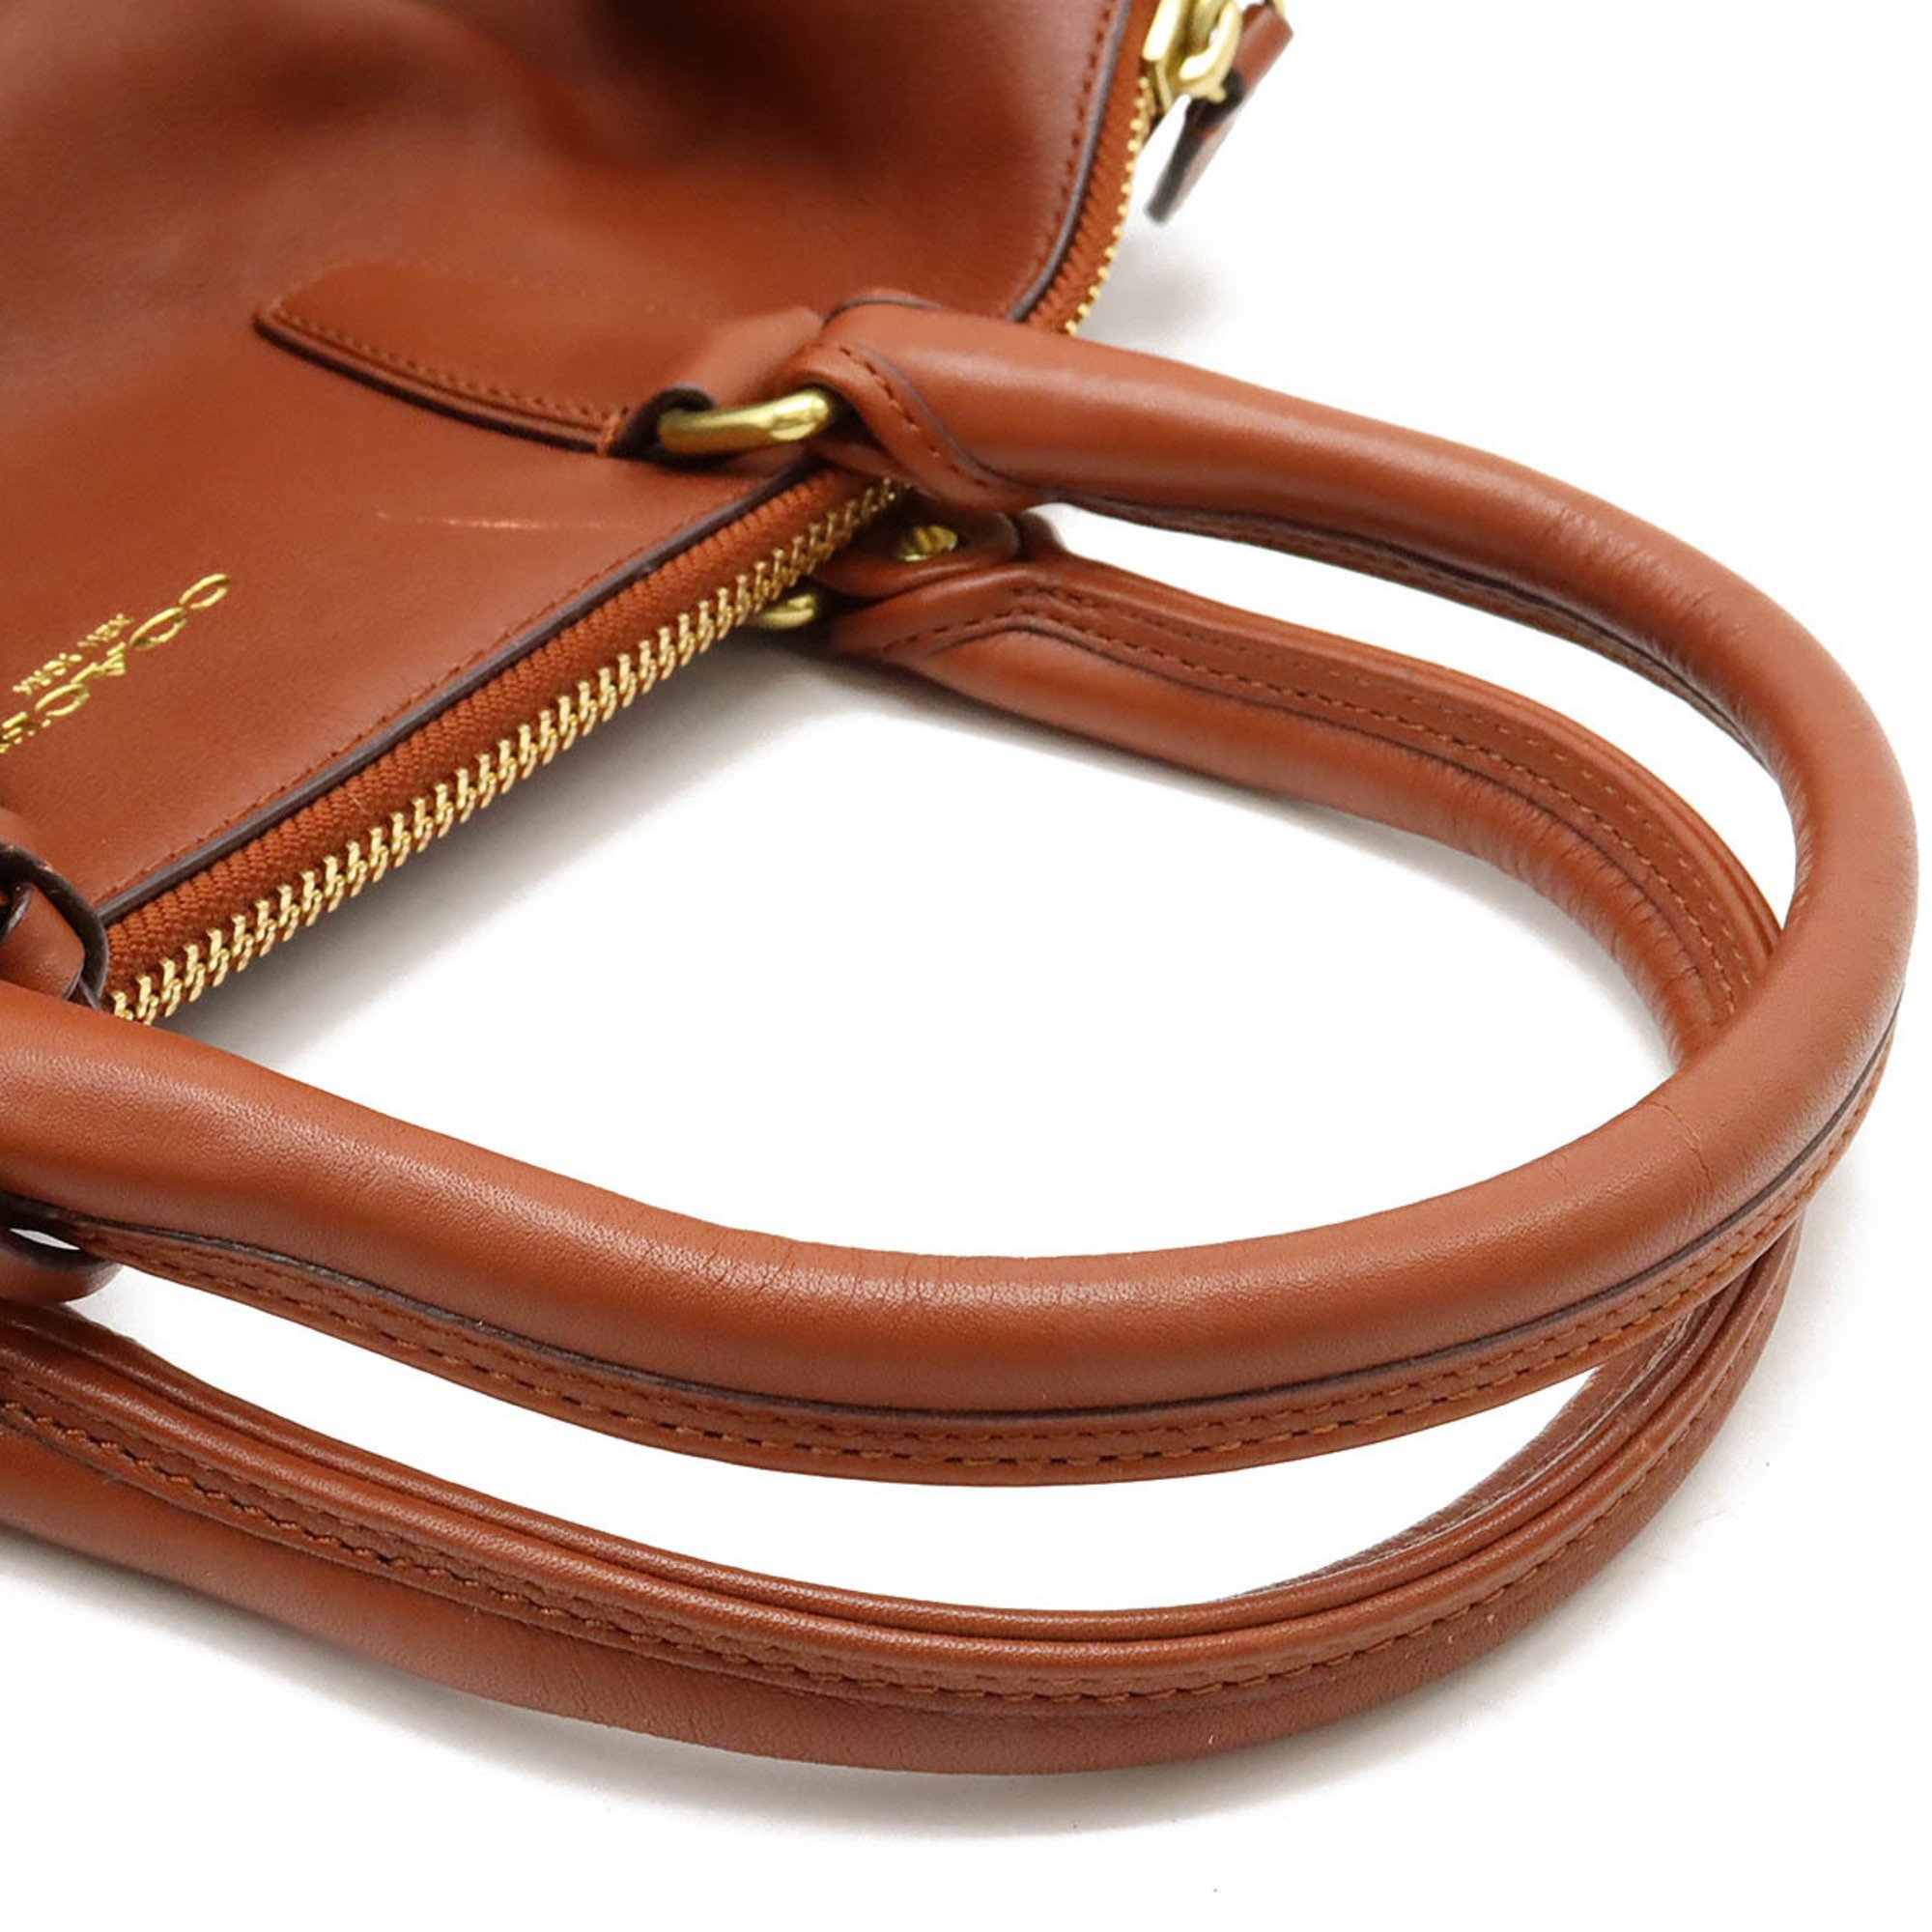 COACH Legacy Leather Molly Satchel Handbag Shoulder Bag Brown 21132